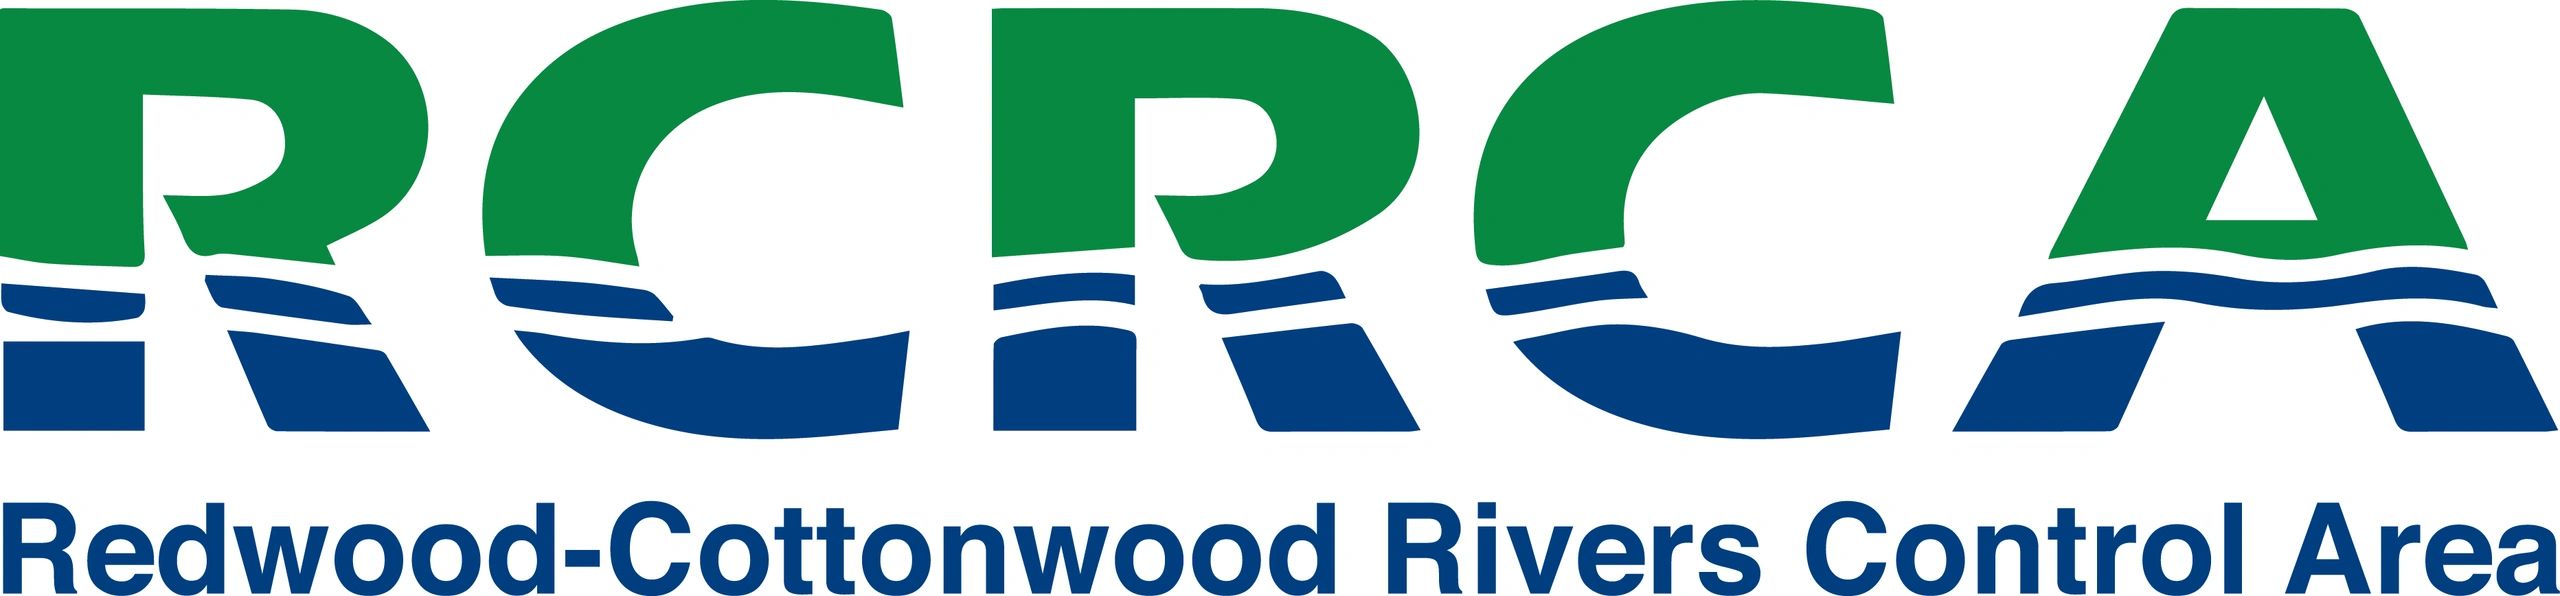 Redwood-Cottonwood Rivers Control Area logo